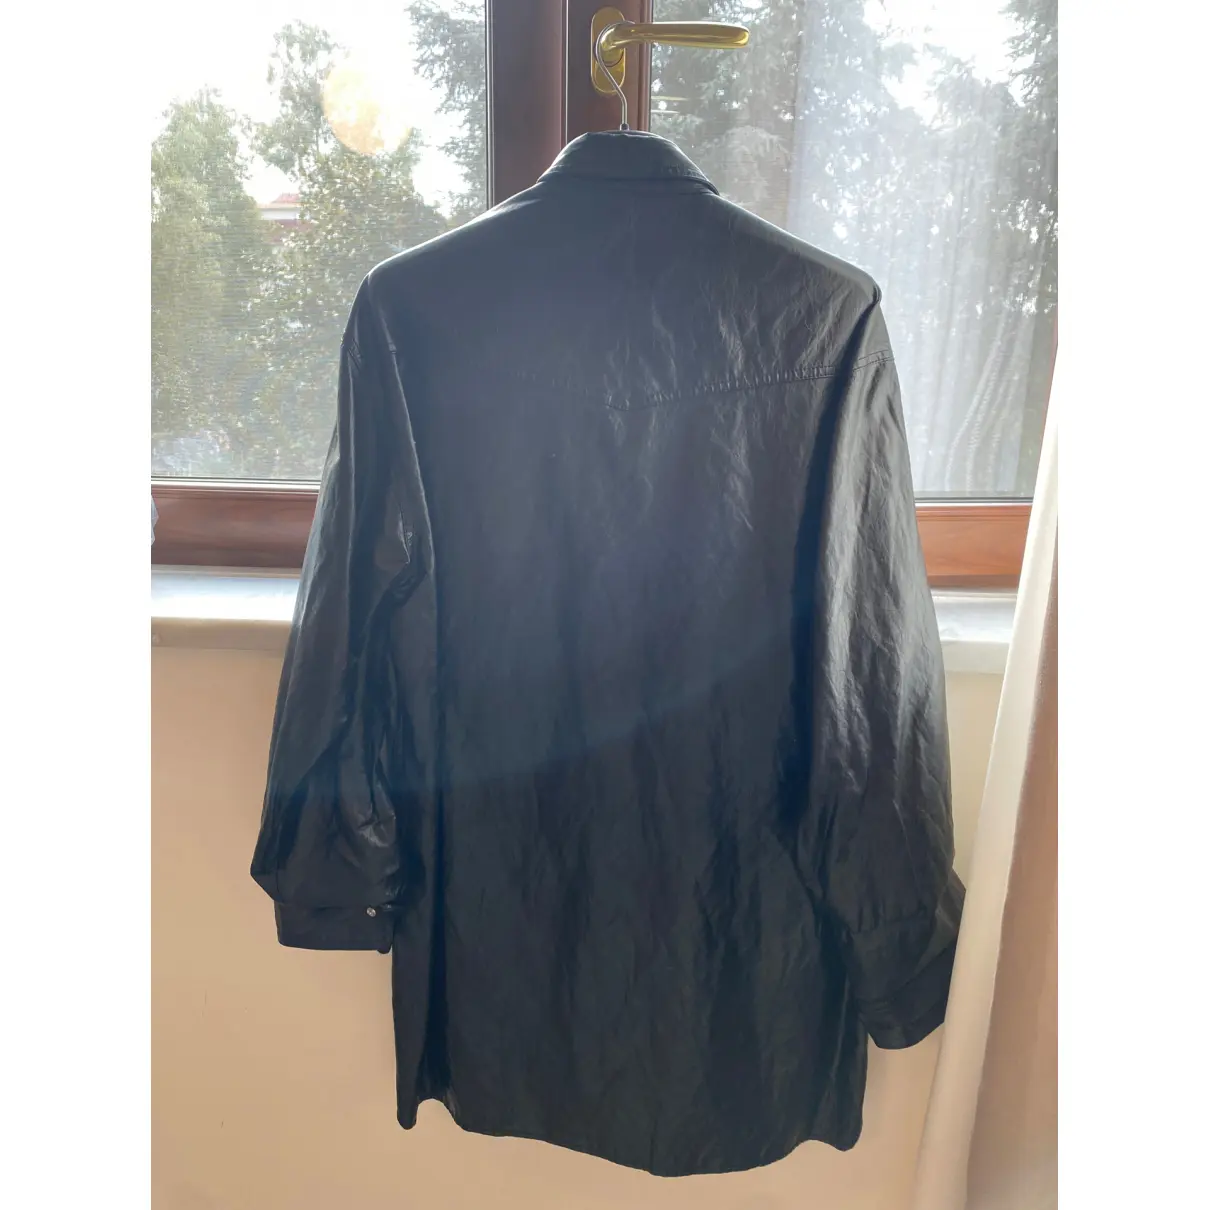 Buy Golden Goose Leather jacket online